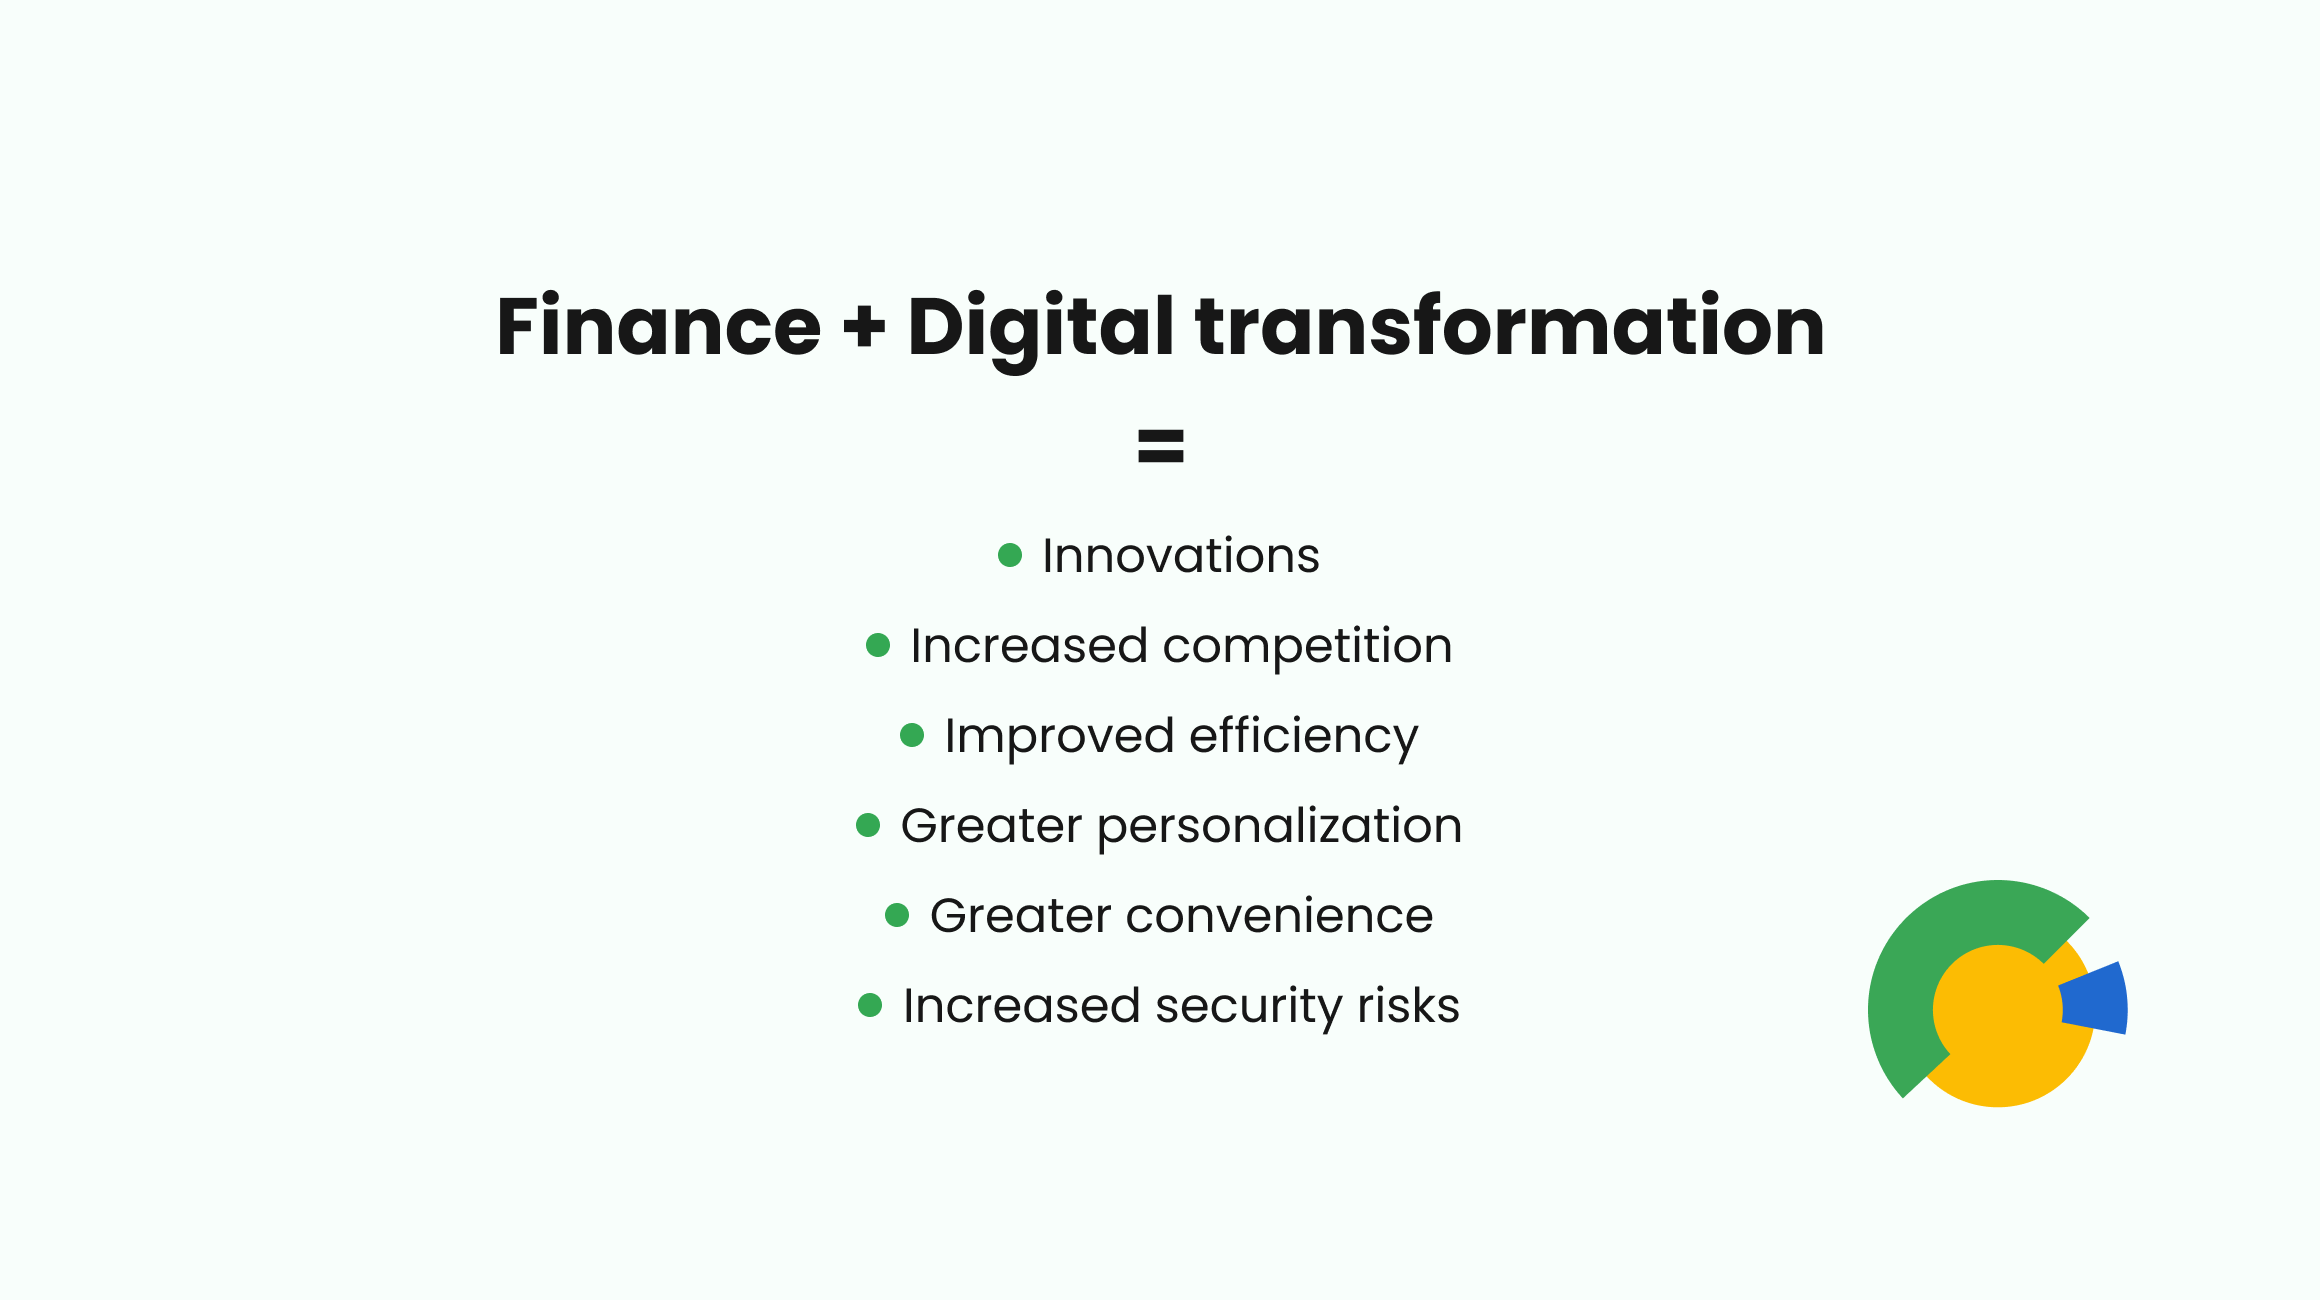 Finance and digital transformation